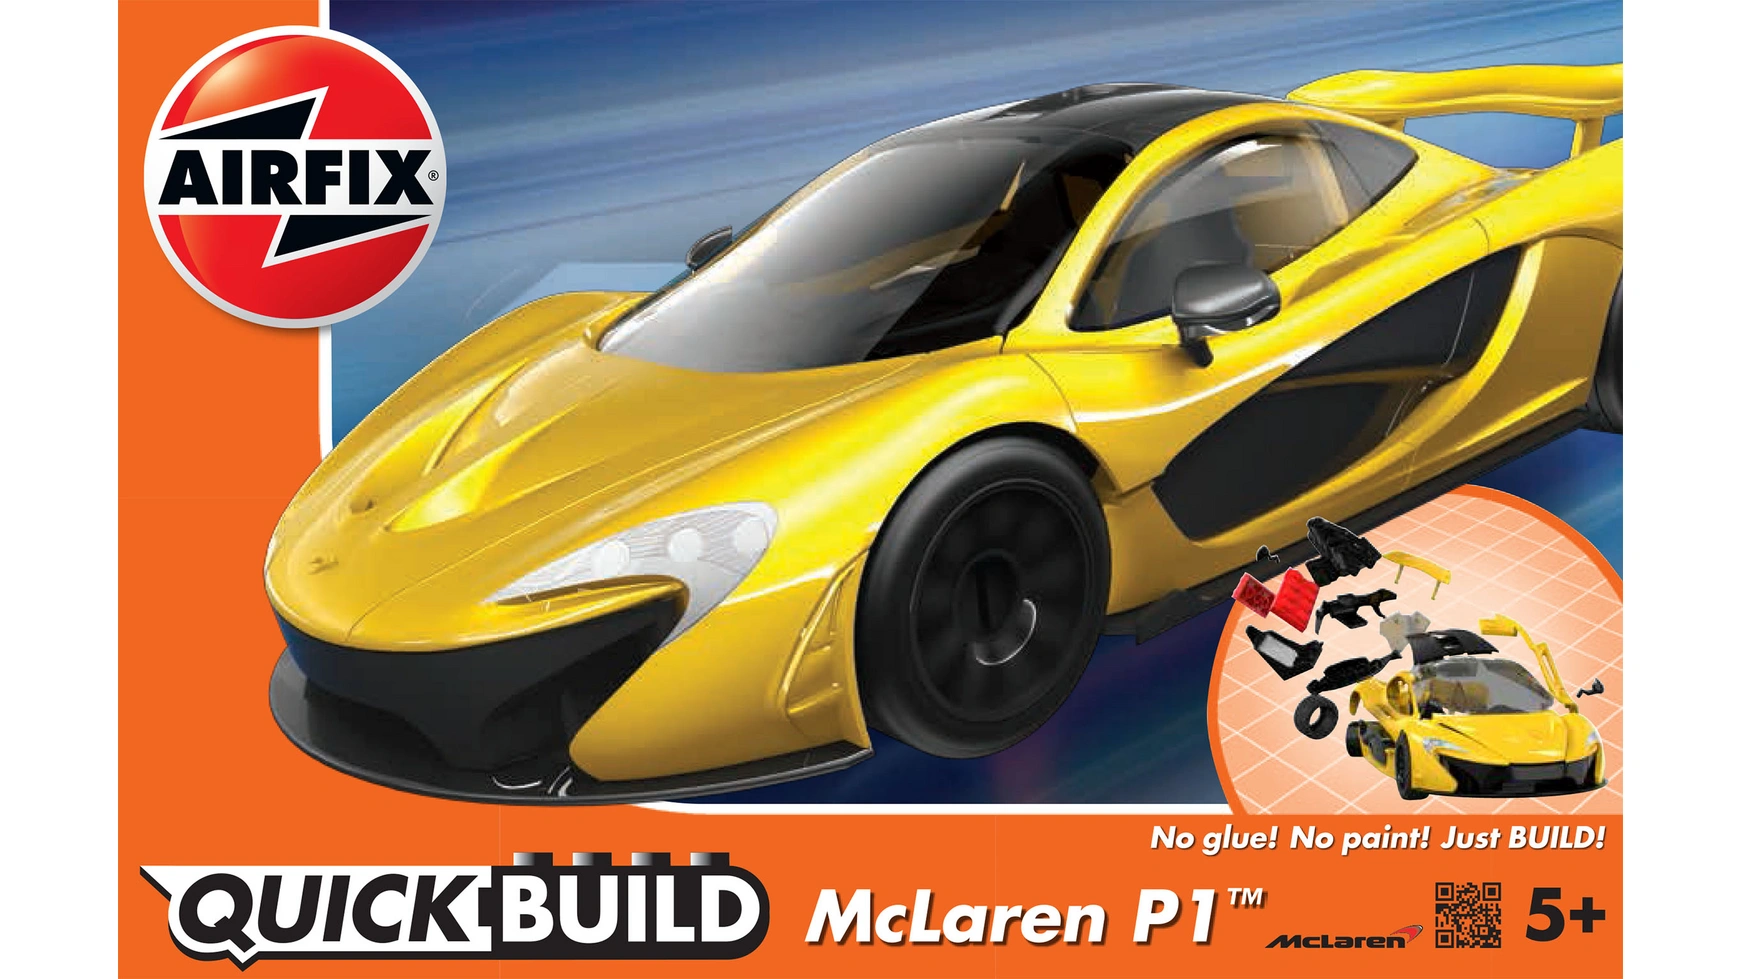 Airfix McLaren P1 Quickbuild толокар mclaren p1 звуковые эффекты цвет красный